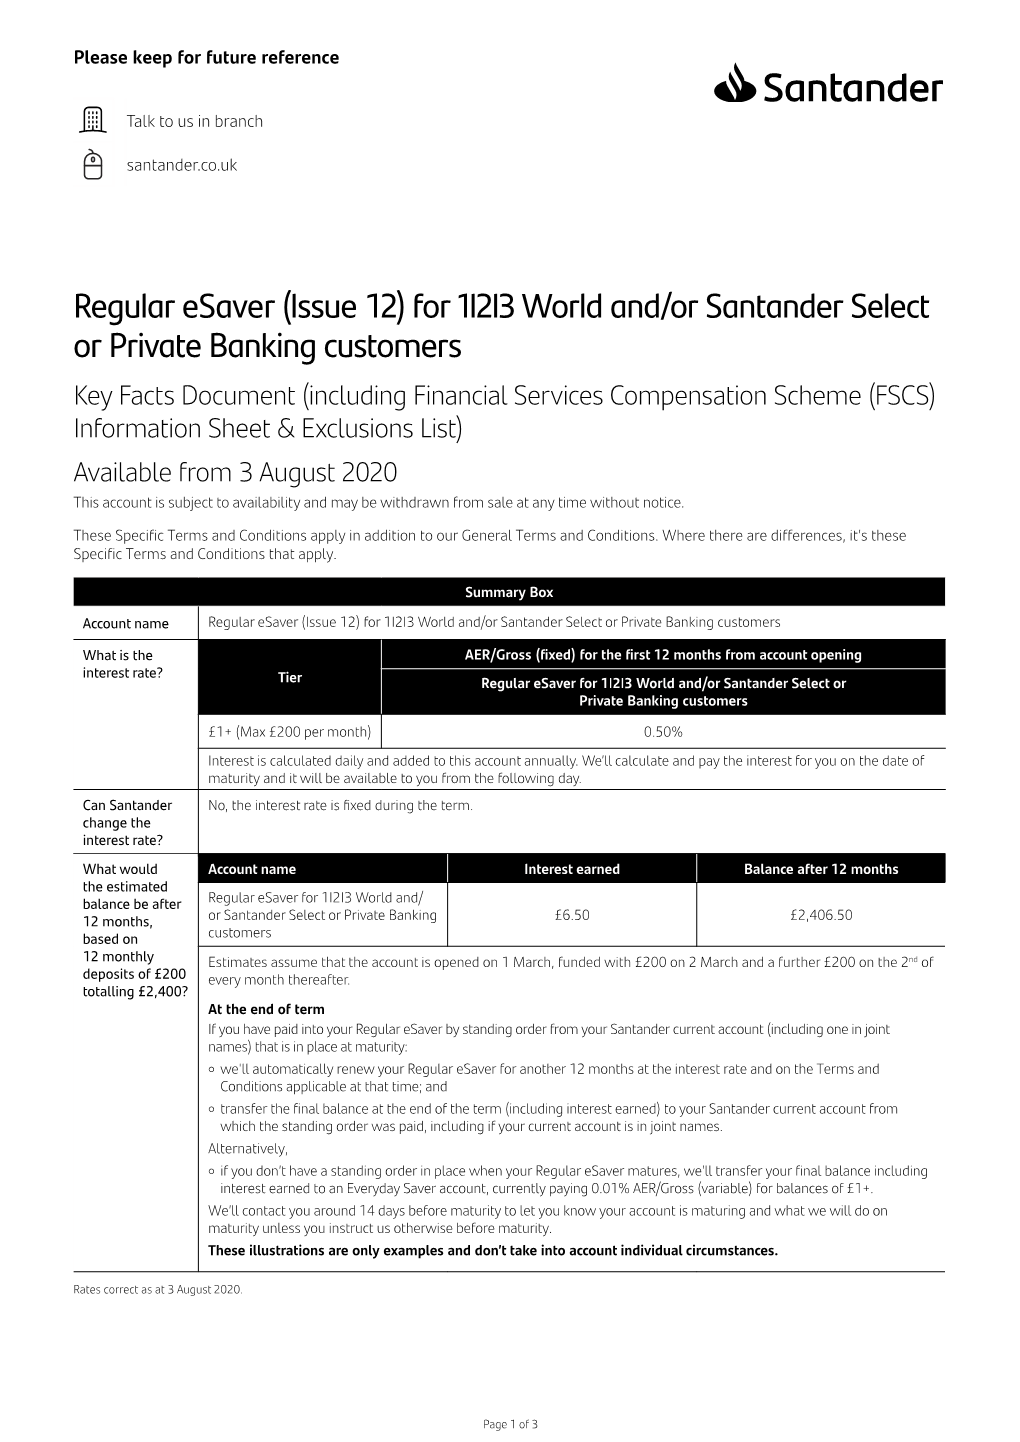 Regular Esaver (Issue 12) for 1I2I3 World And/Or Santander Select Or